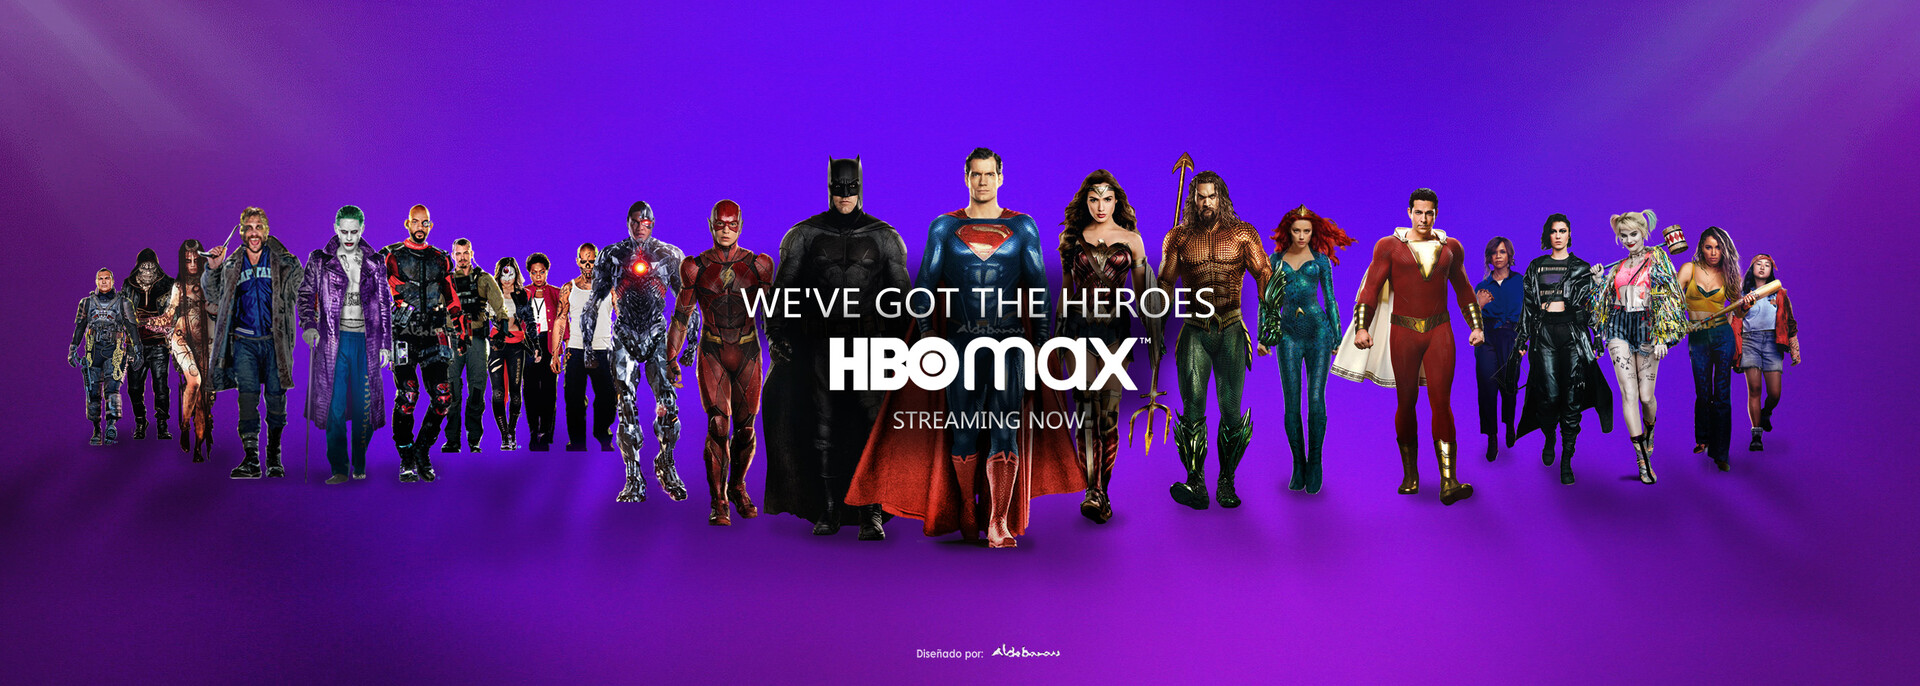 Film Updates on X: #TheGildedAge premieres on HBO Max on January 24.   / X